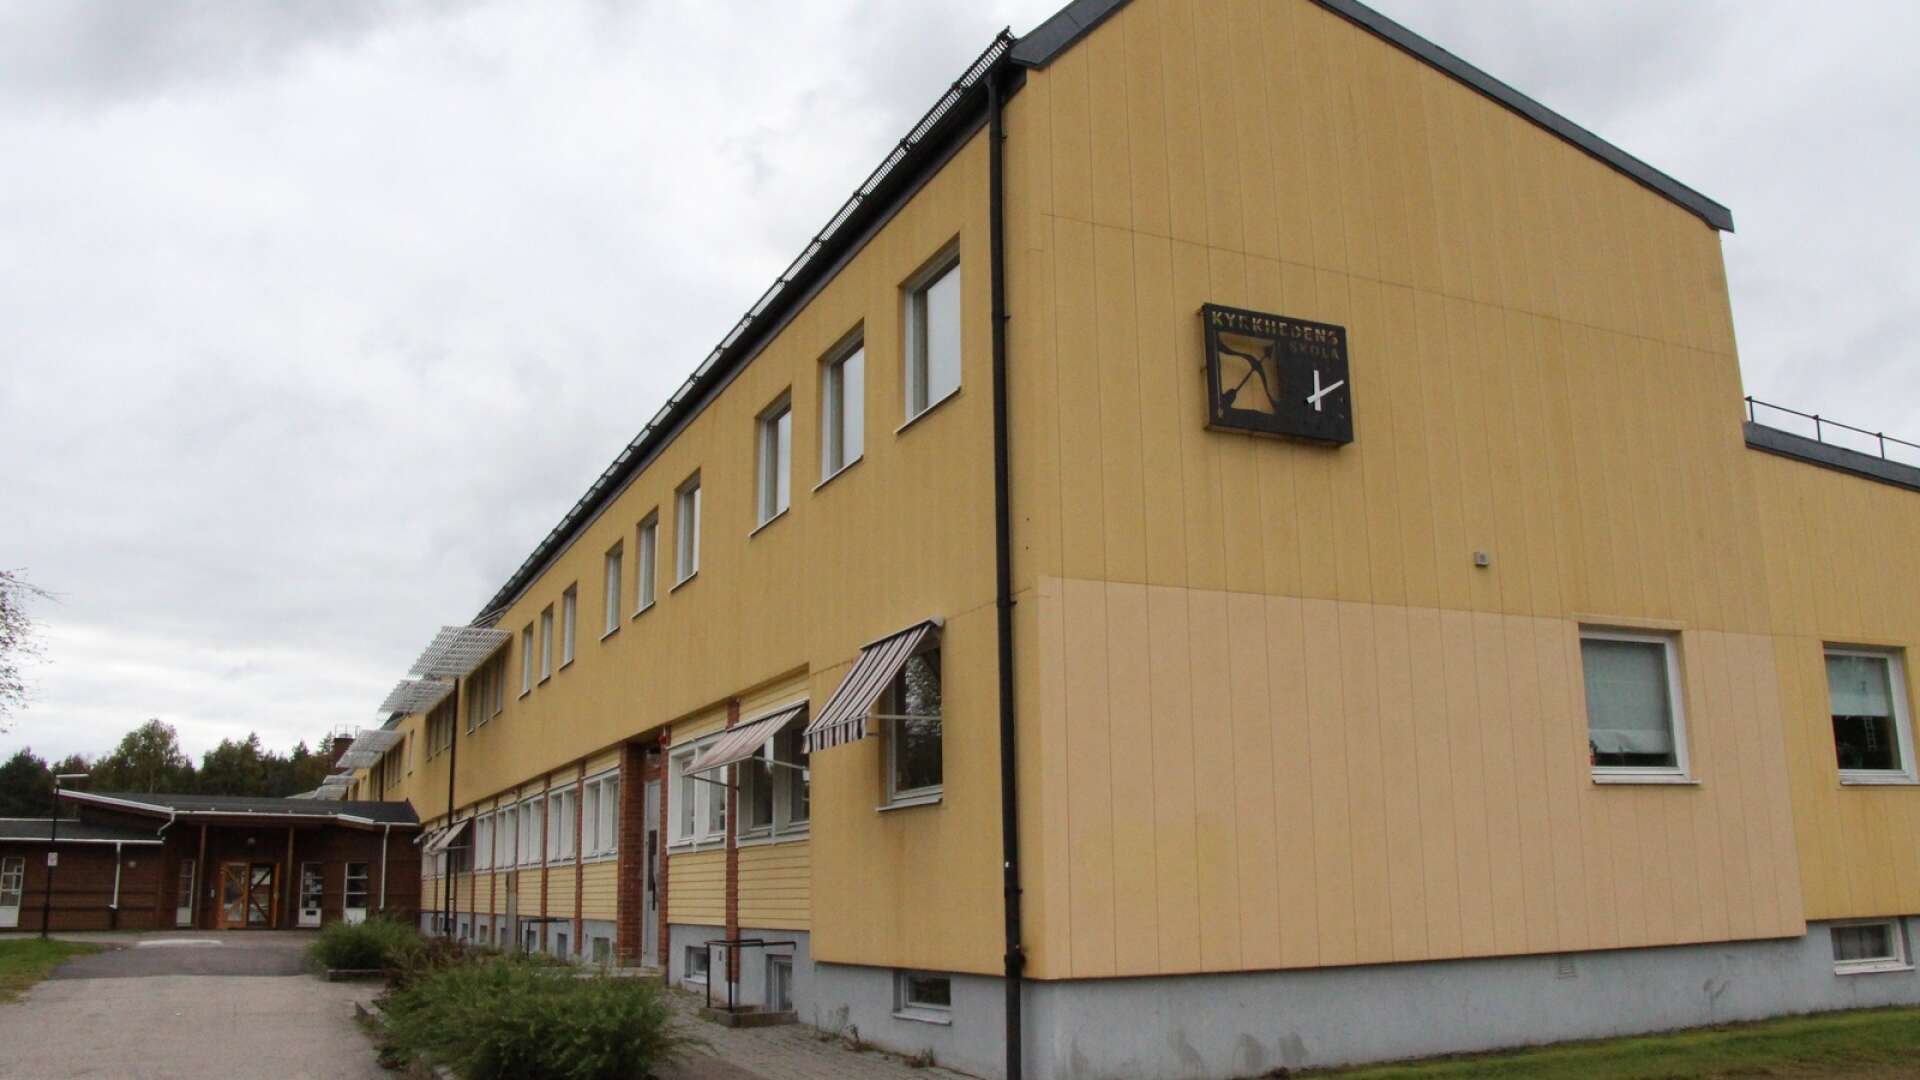 Kyrkhedens skola i Ekshärad.